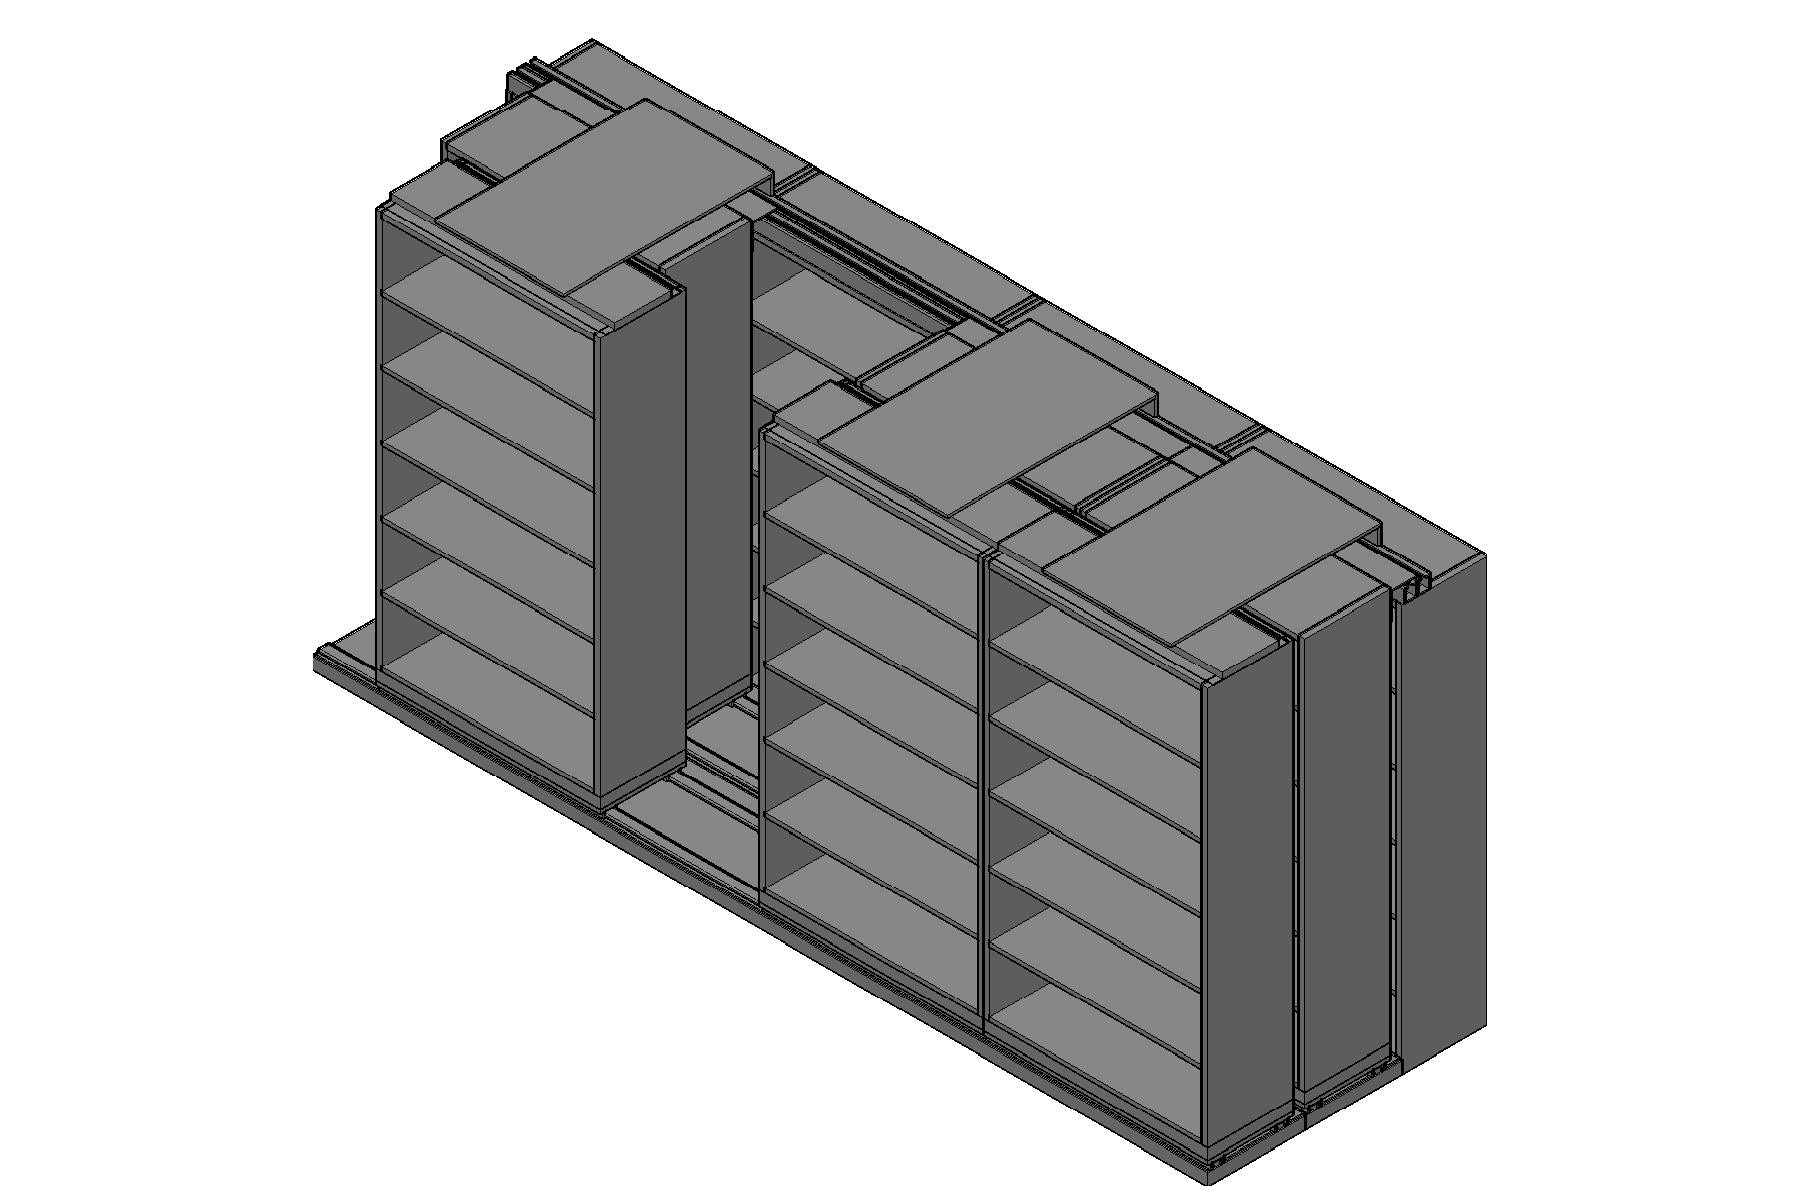 Box Size Sliding Shelves - 3 Rows Deep - 6 Levels - (42" x 16" Shelves) - 172" Total Width